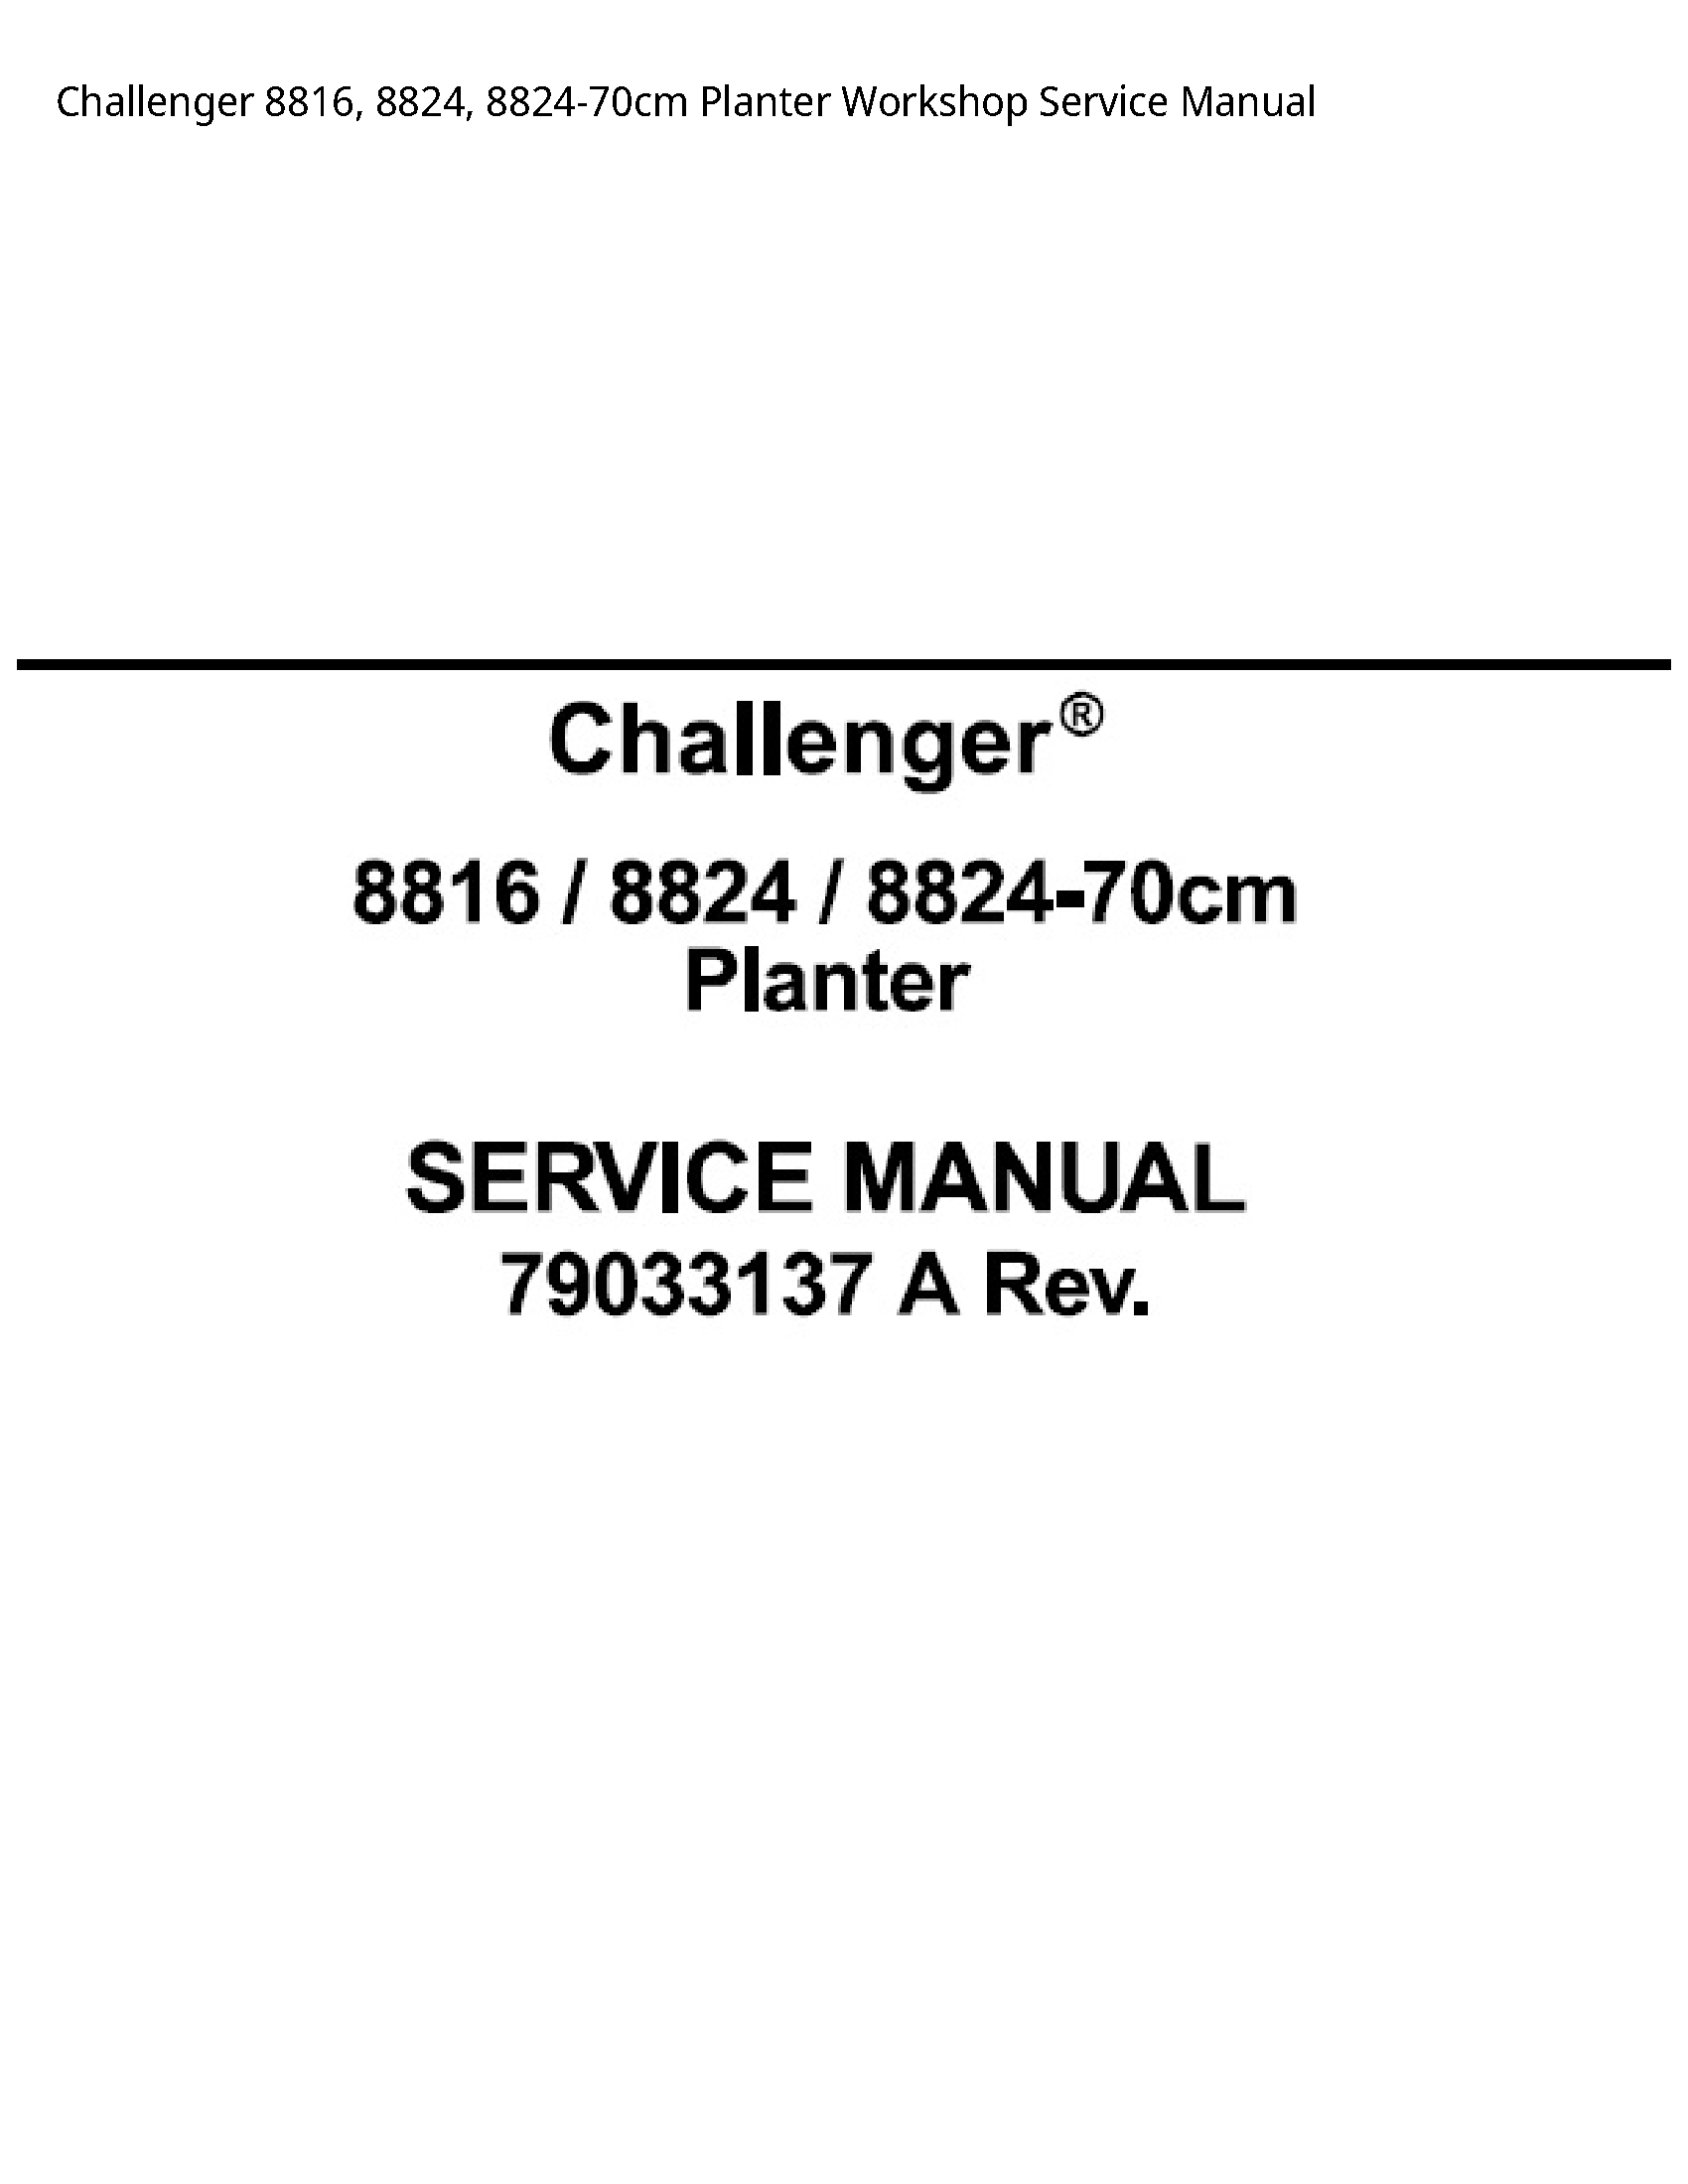 Challenger 8816 Planter Service manual